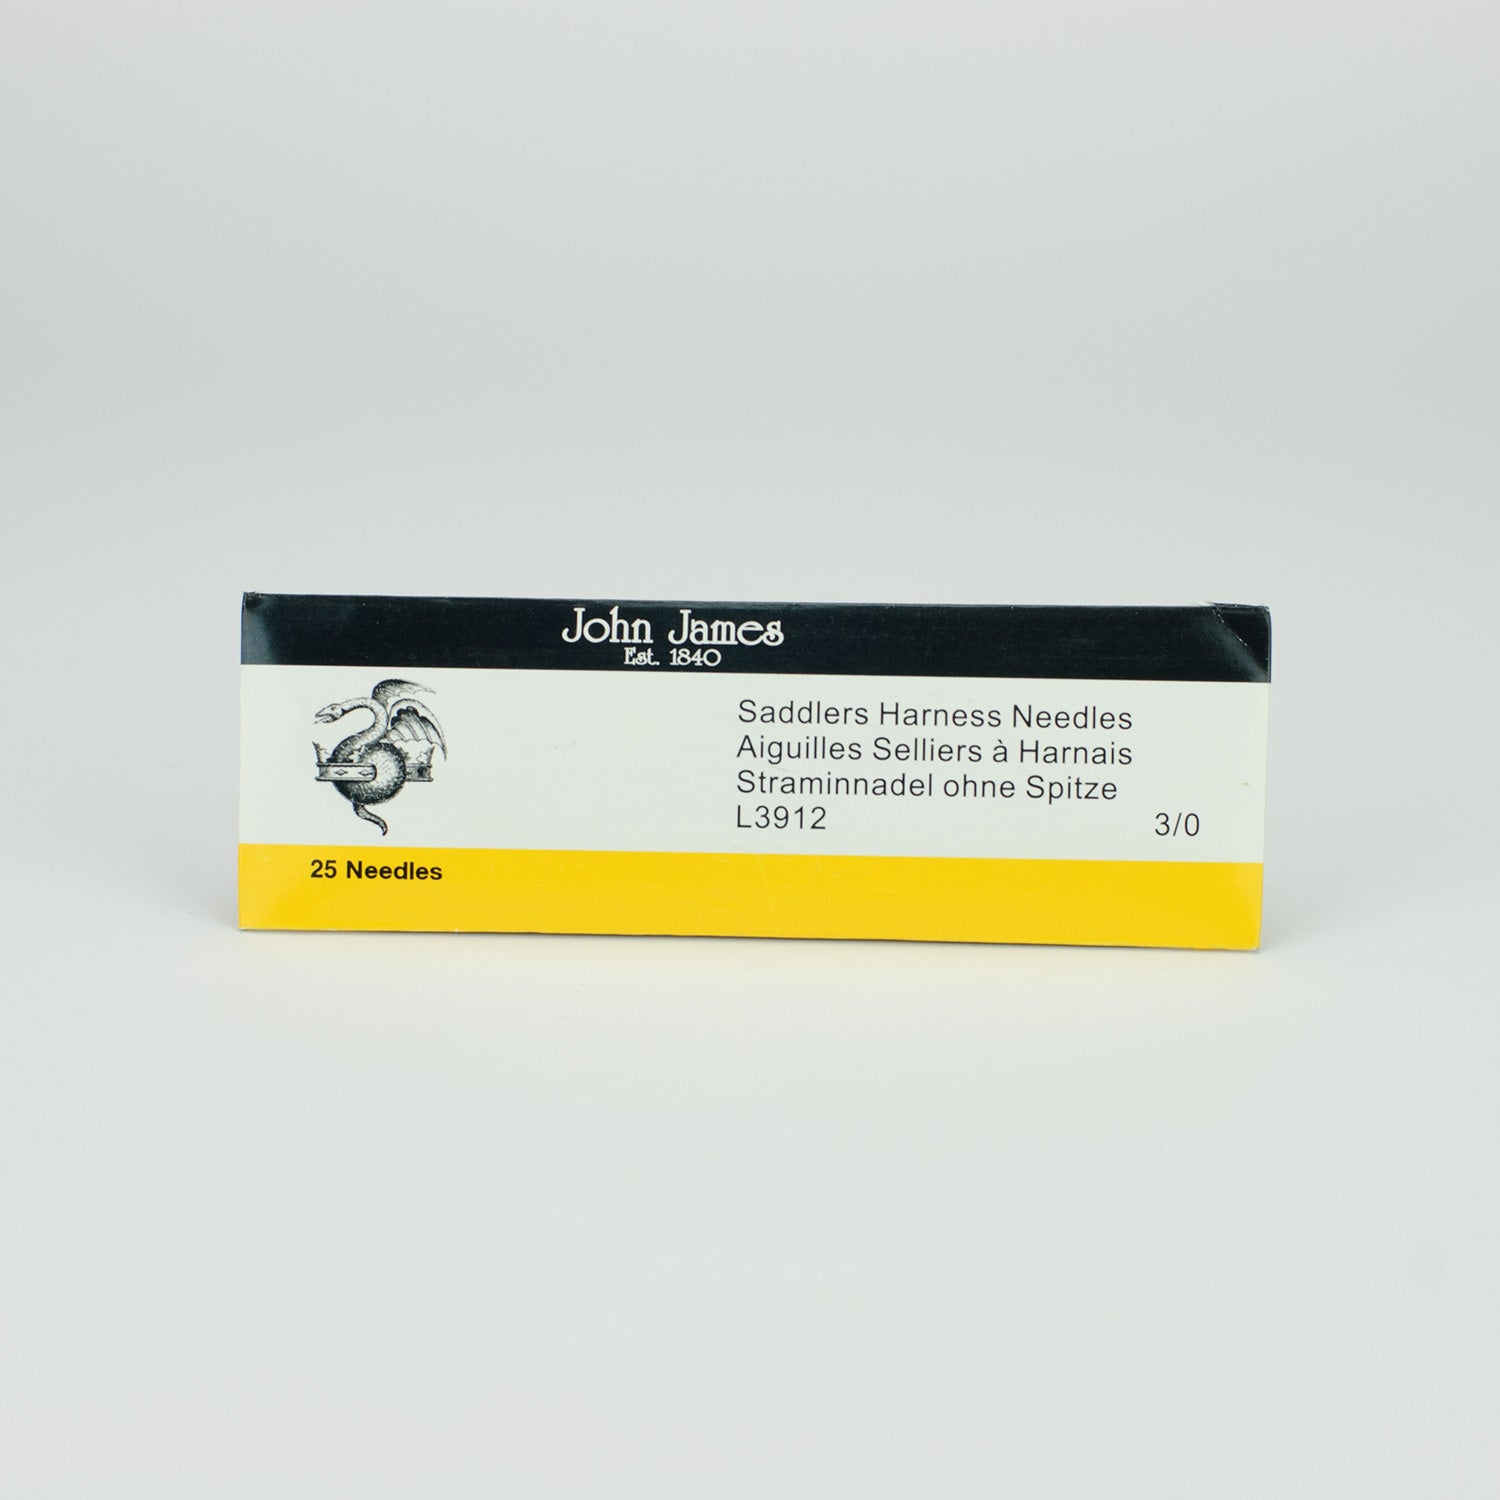 25 John James Saddlers Harness Needles 3/0 size